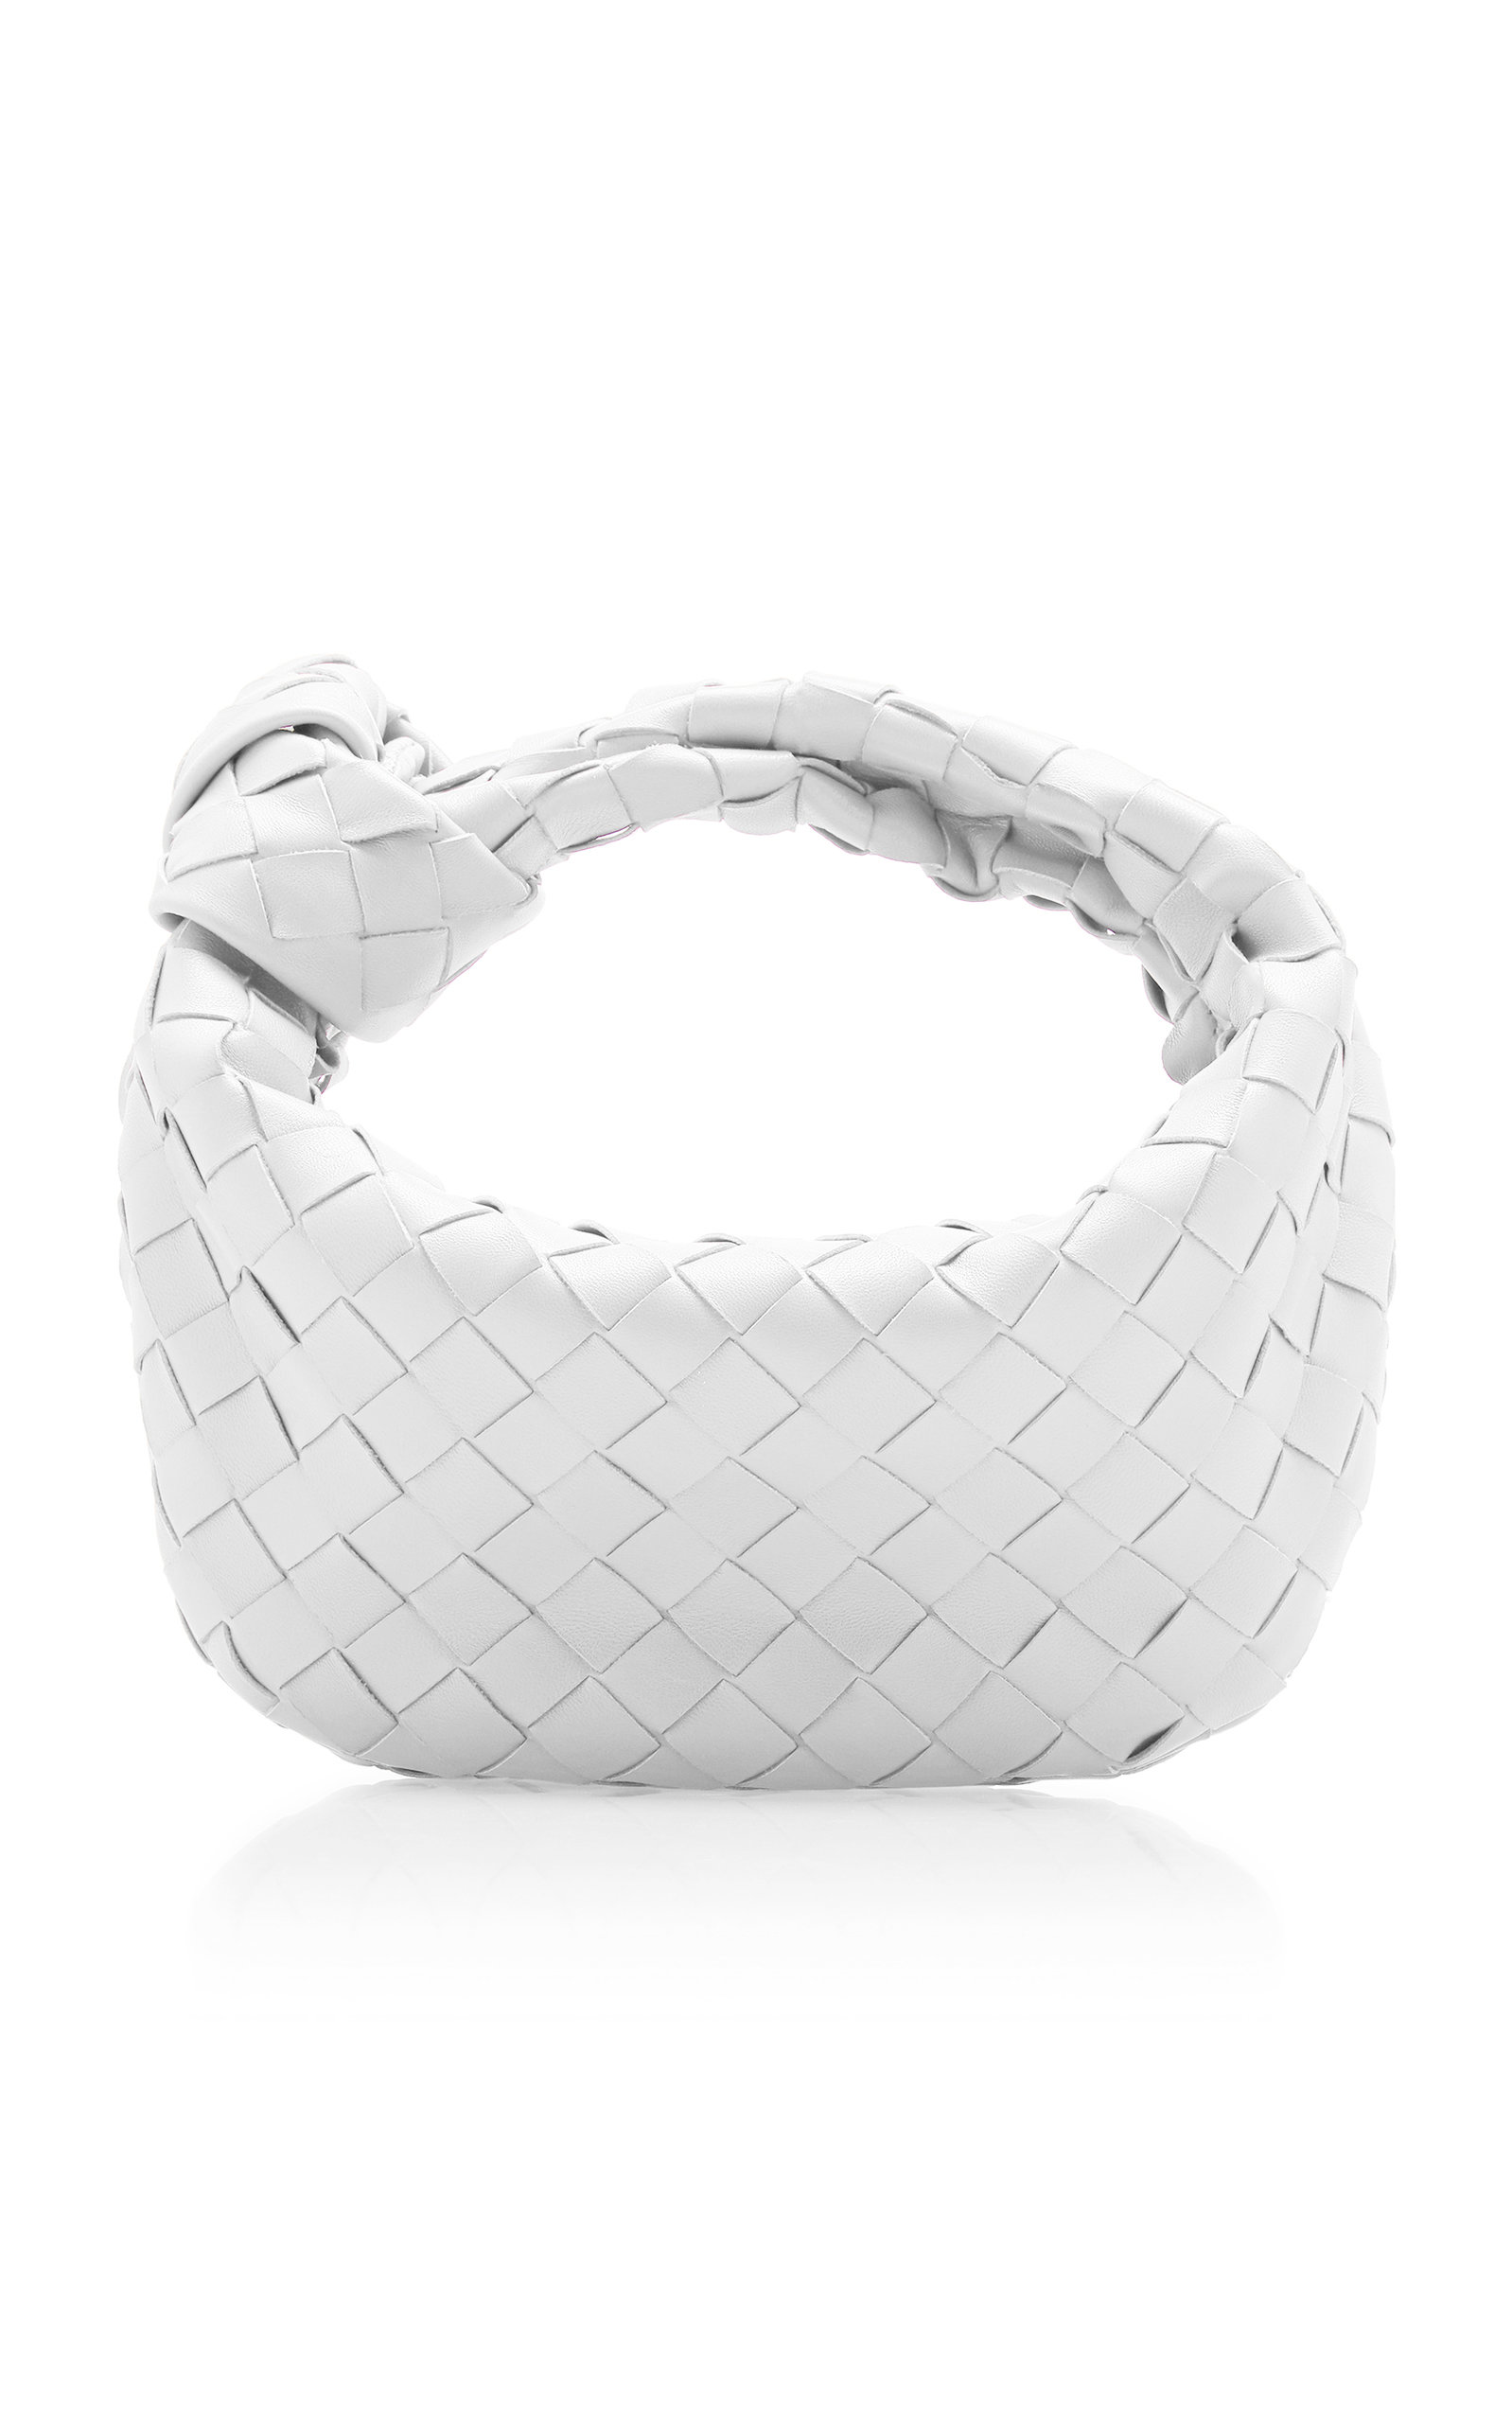 Bottega Veneta - The Mini Jodie Leather Bag - White - OS - Moda Operandi